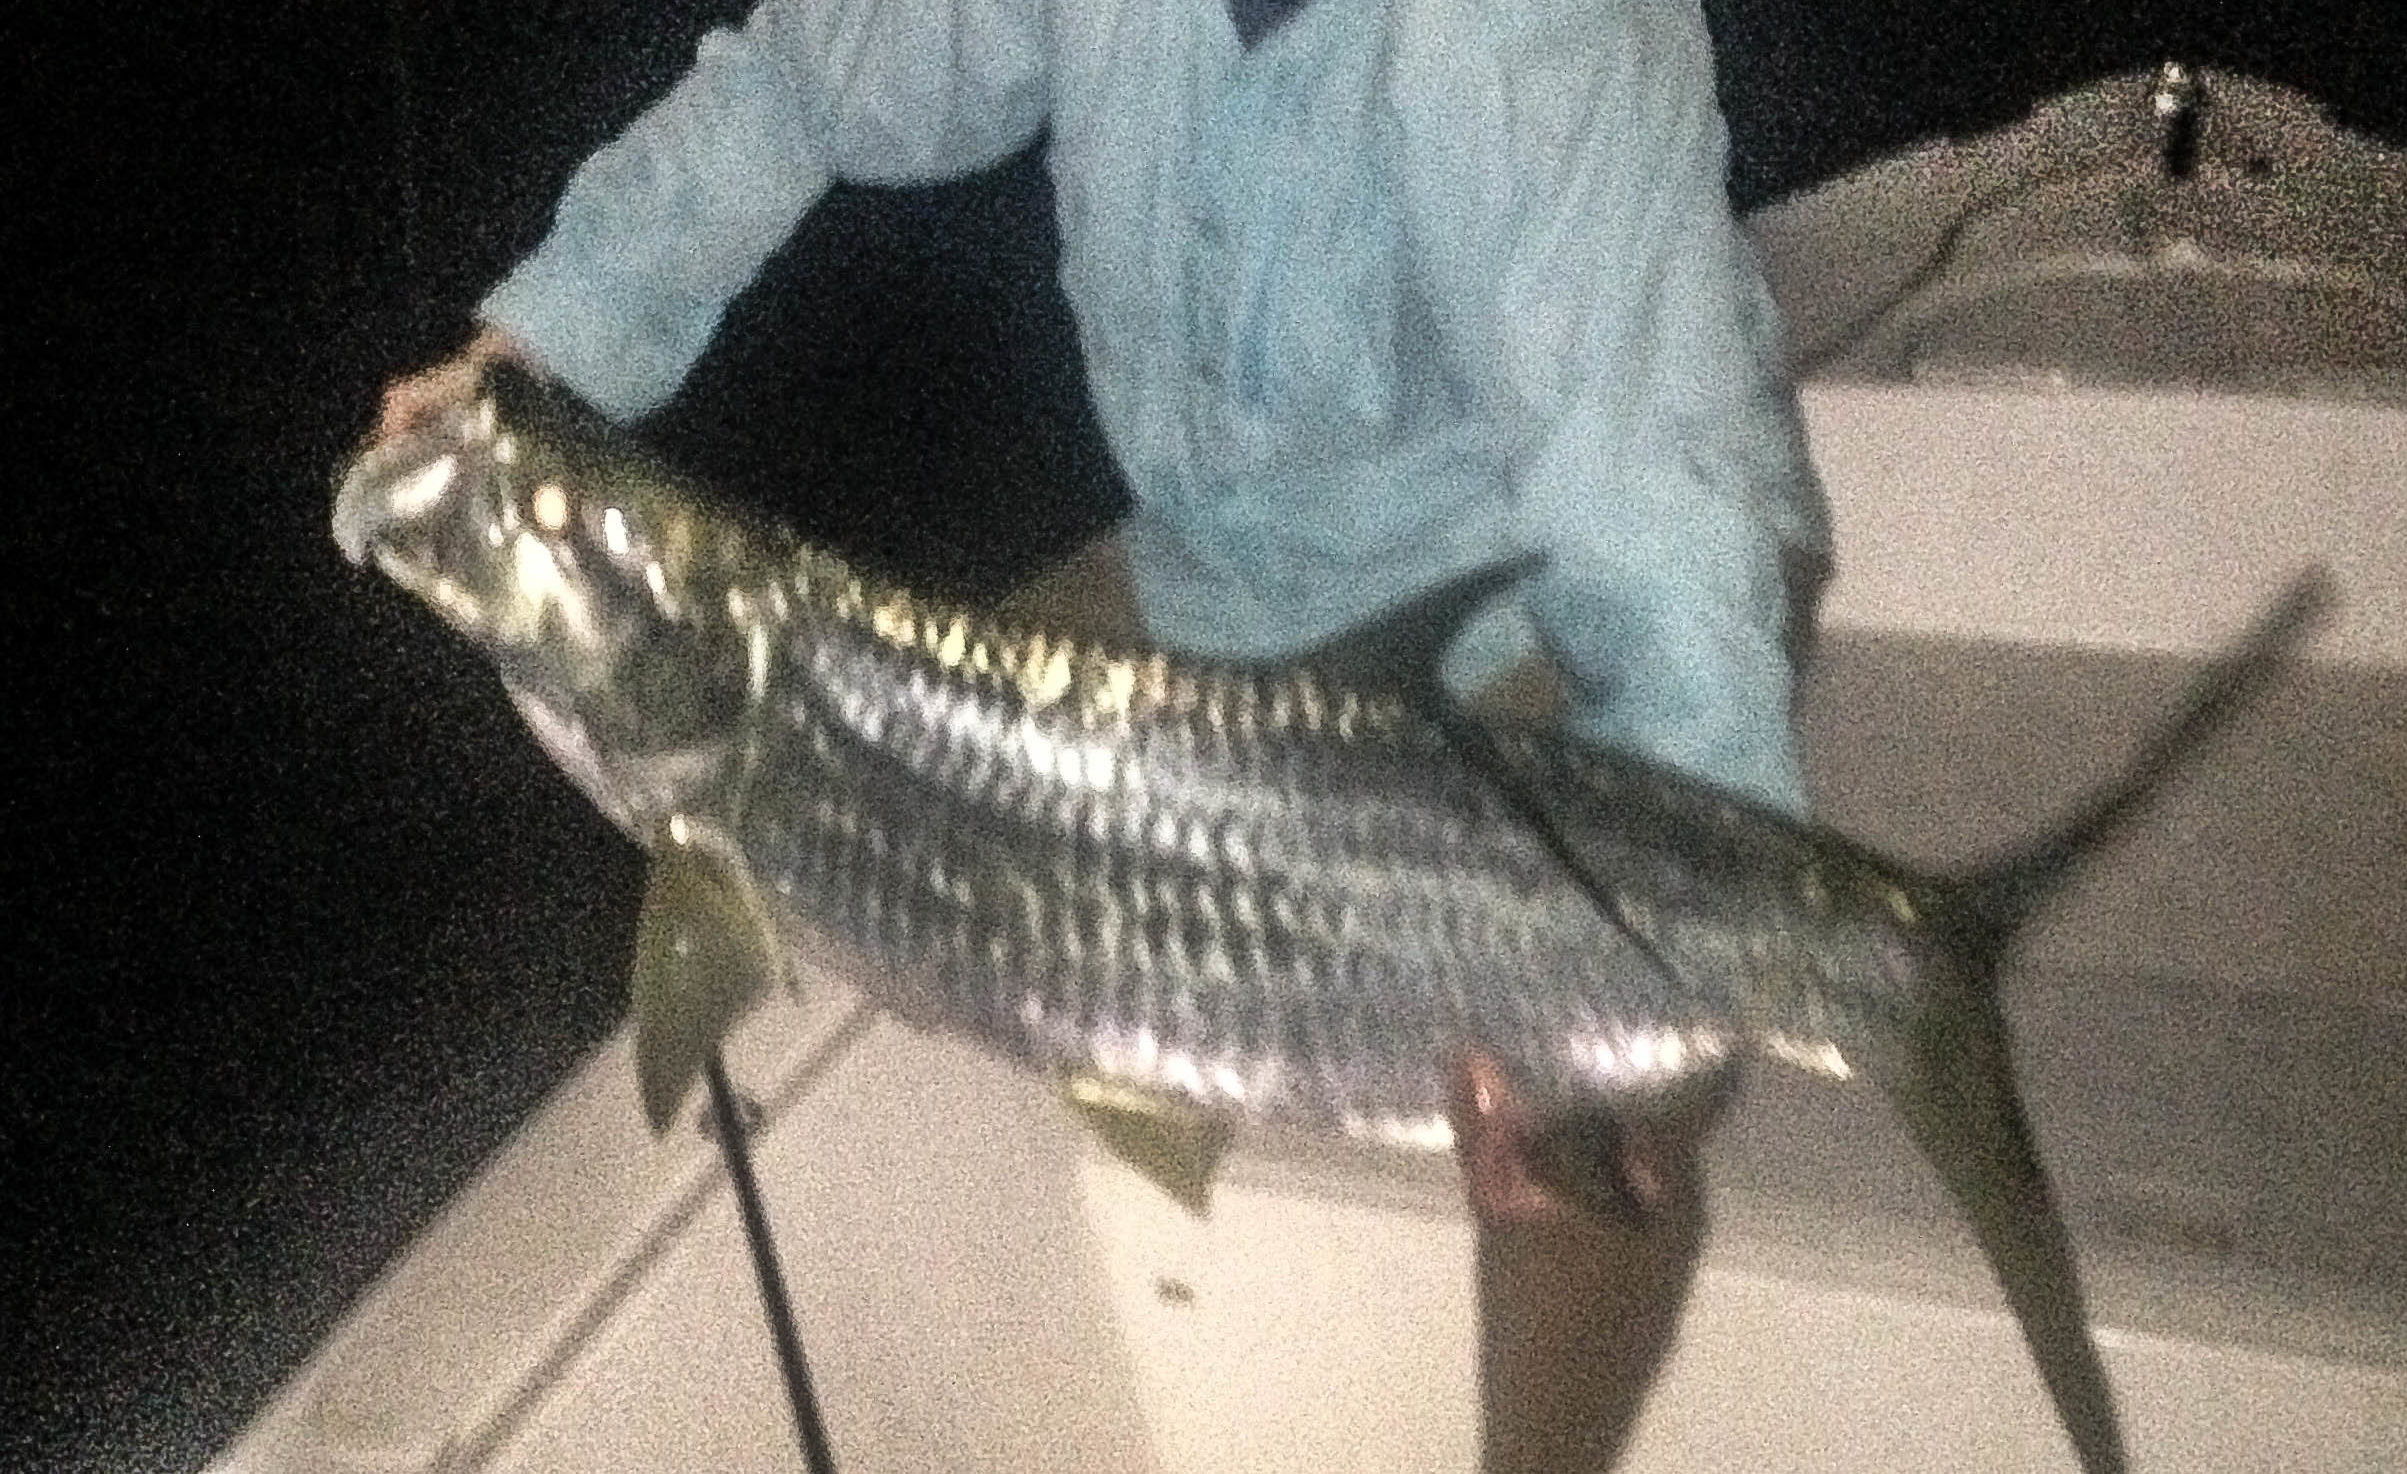 Capt nick labadie is holding a nice tarpon he caught while fishing Bahia Honda bridge at night